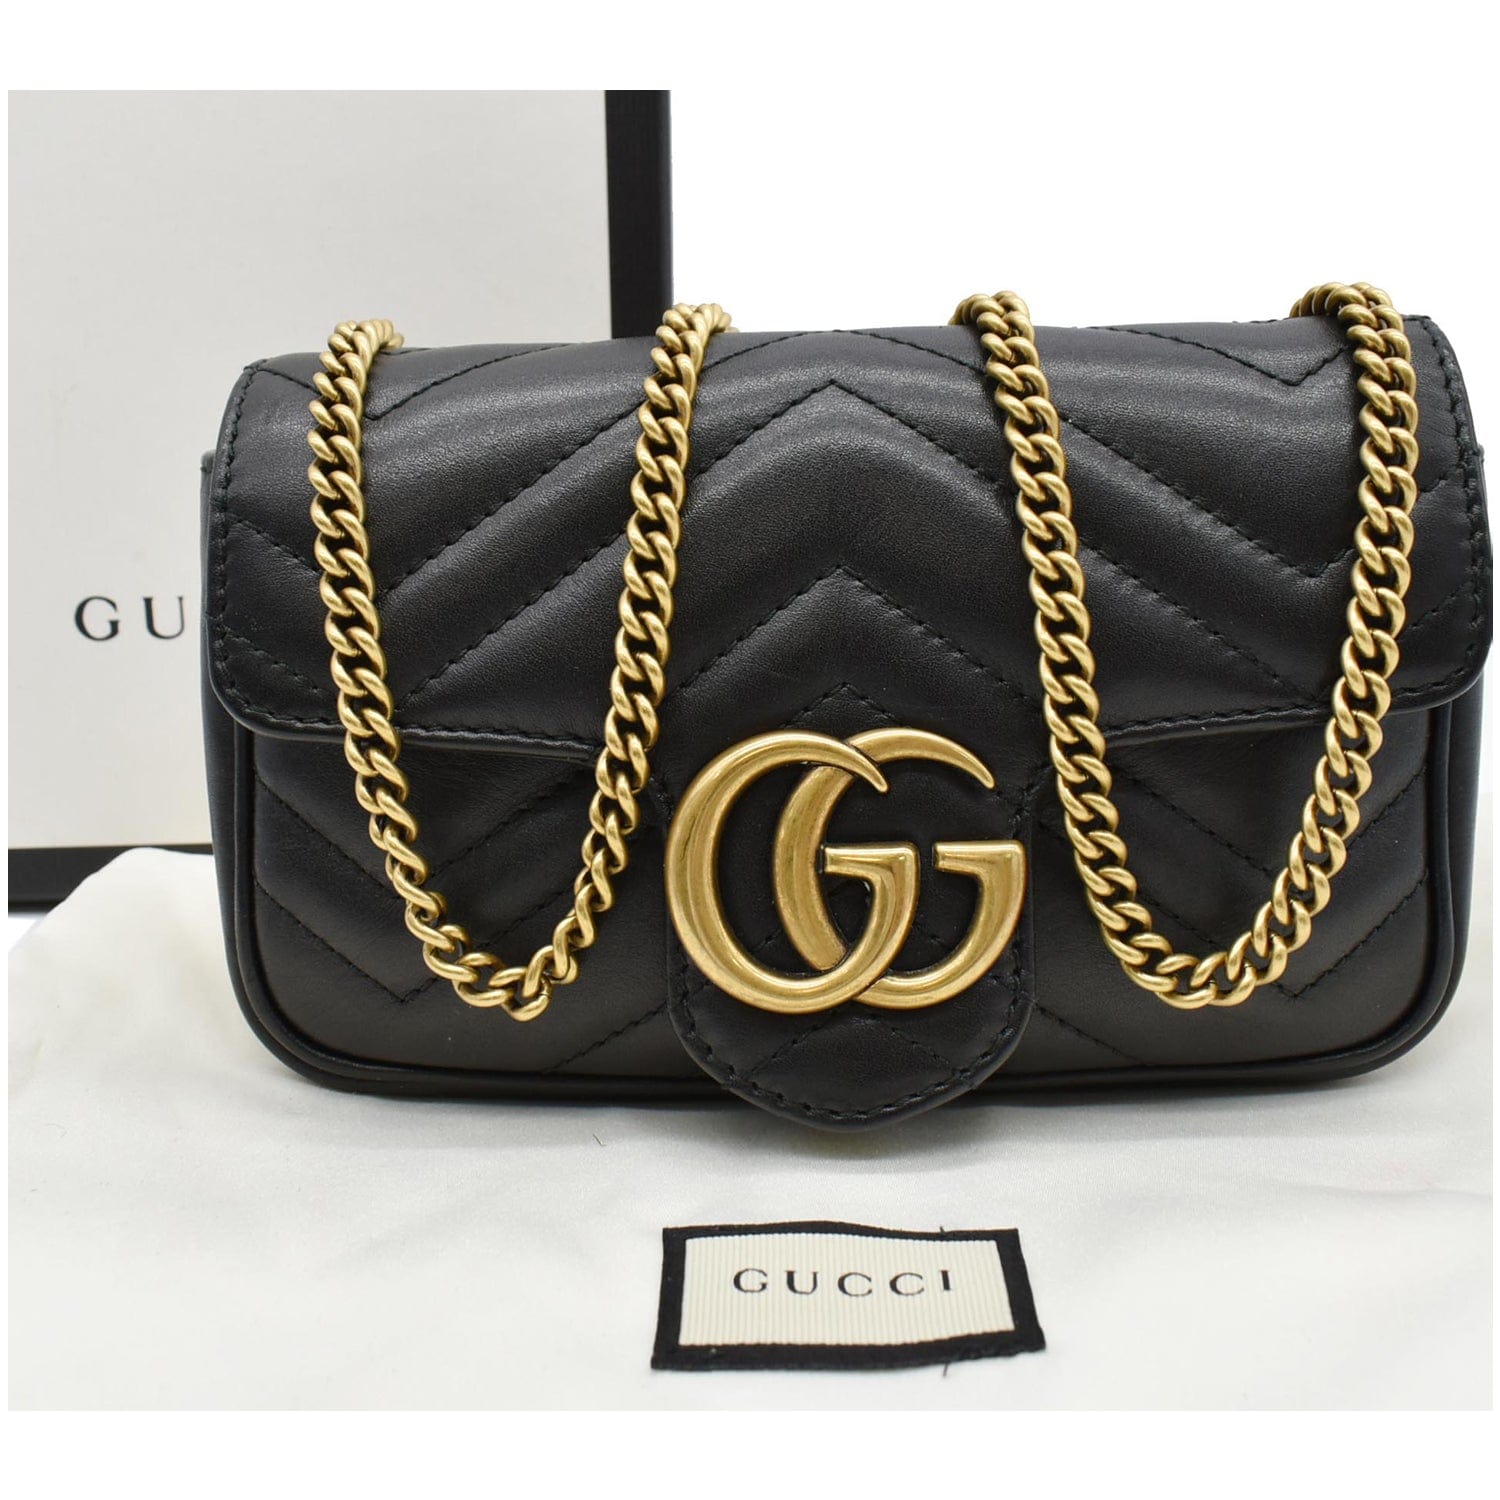 Shop the GG Marmont matelassé mini chain bag in black at GUCCI.COM